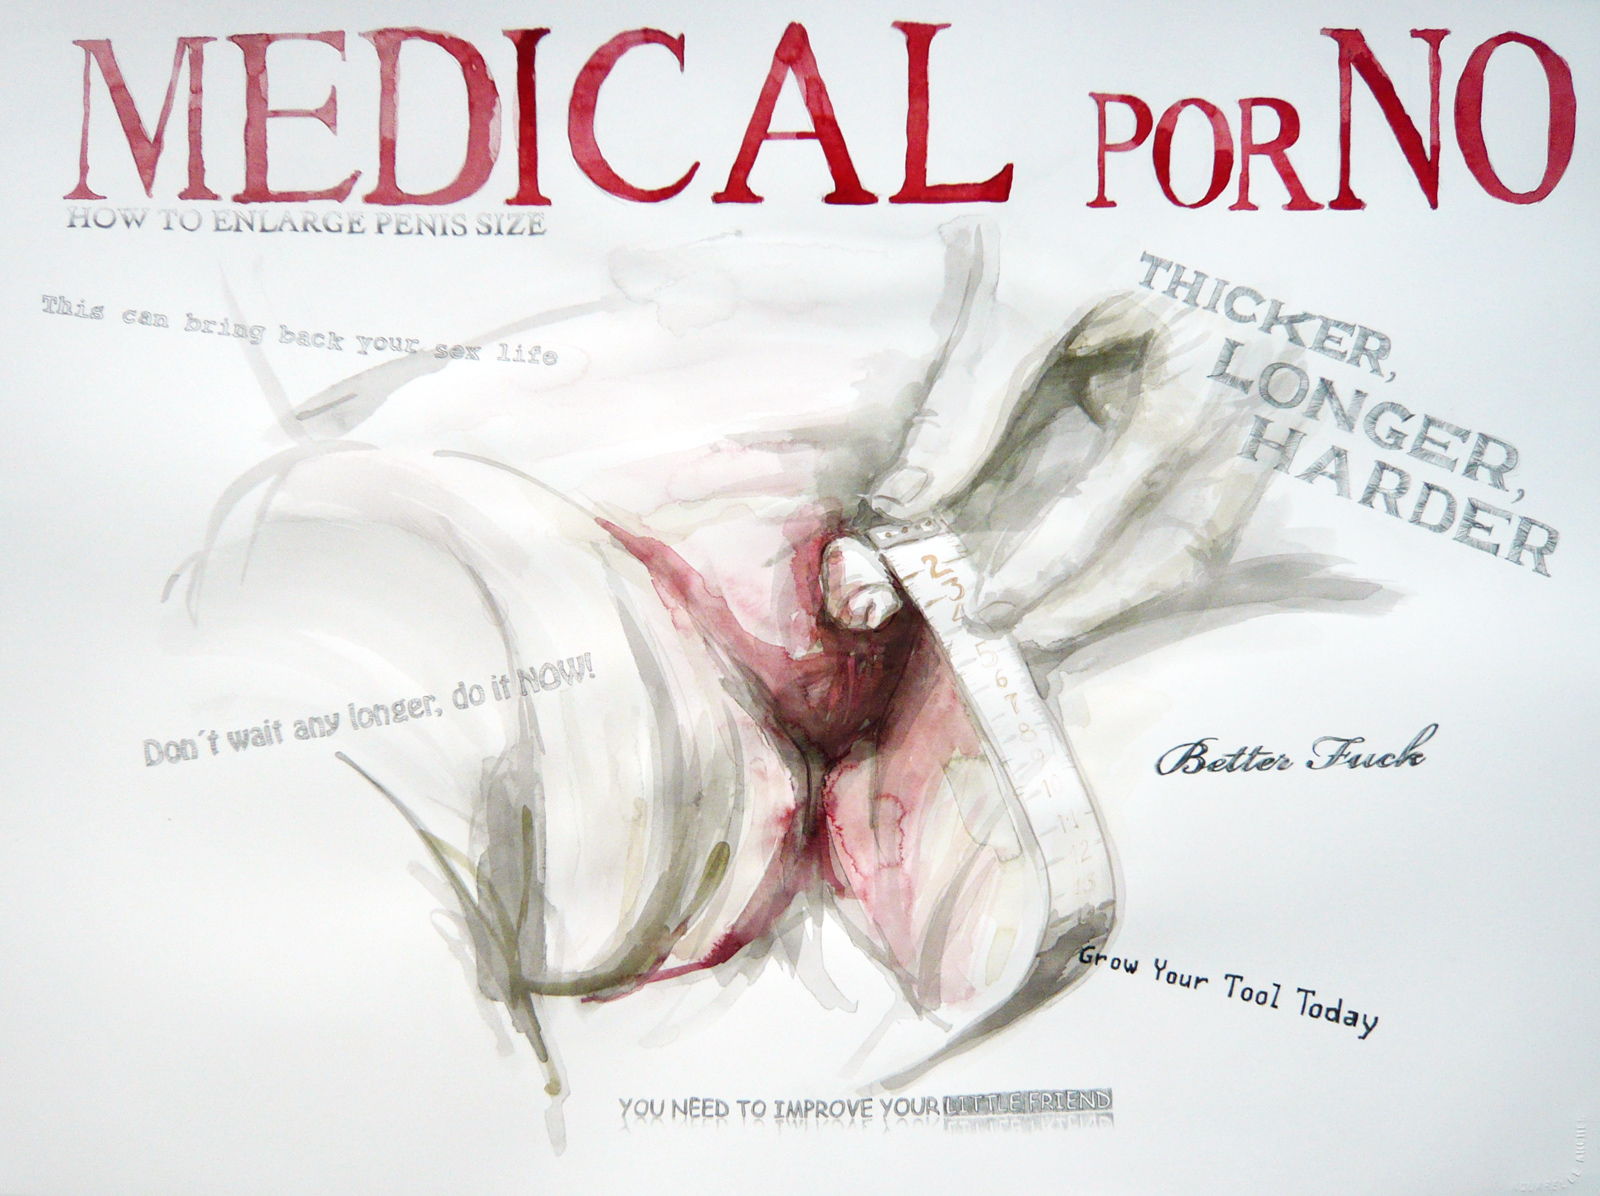 Medical PorNo Vs2